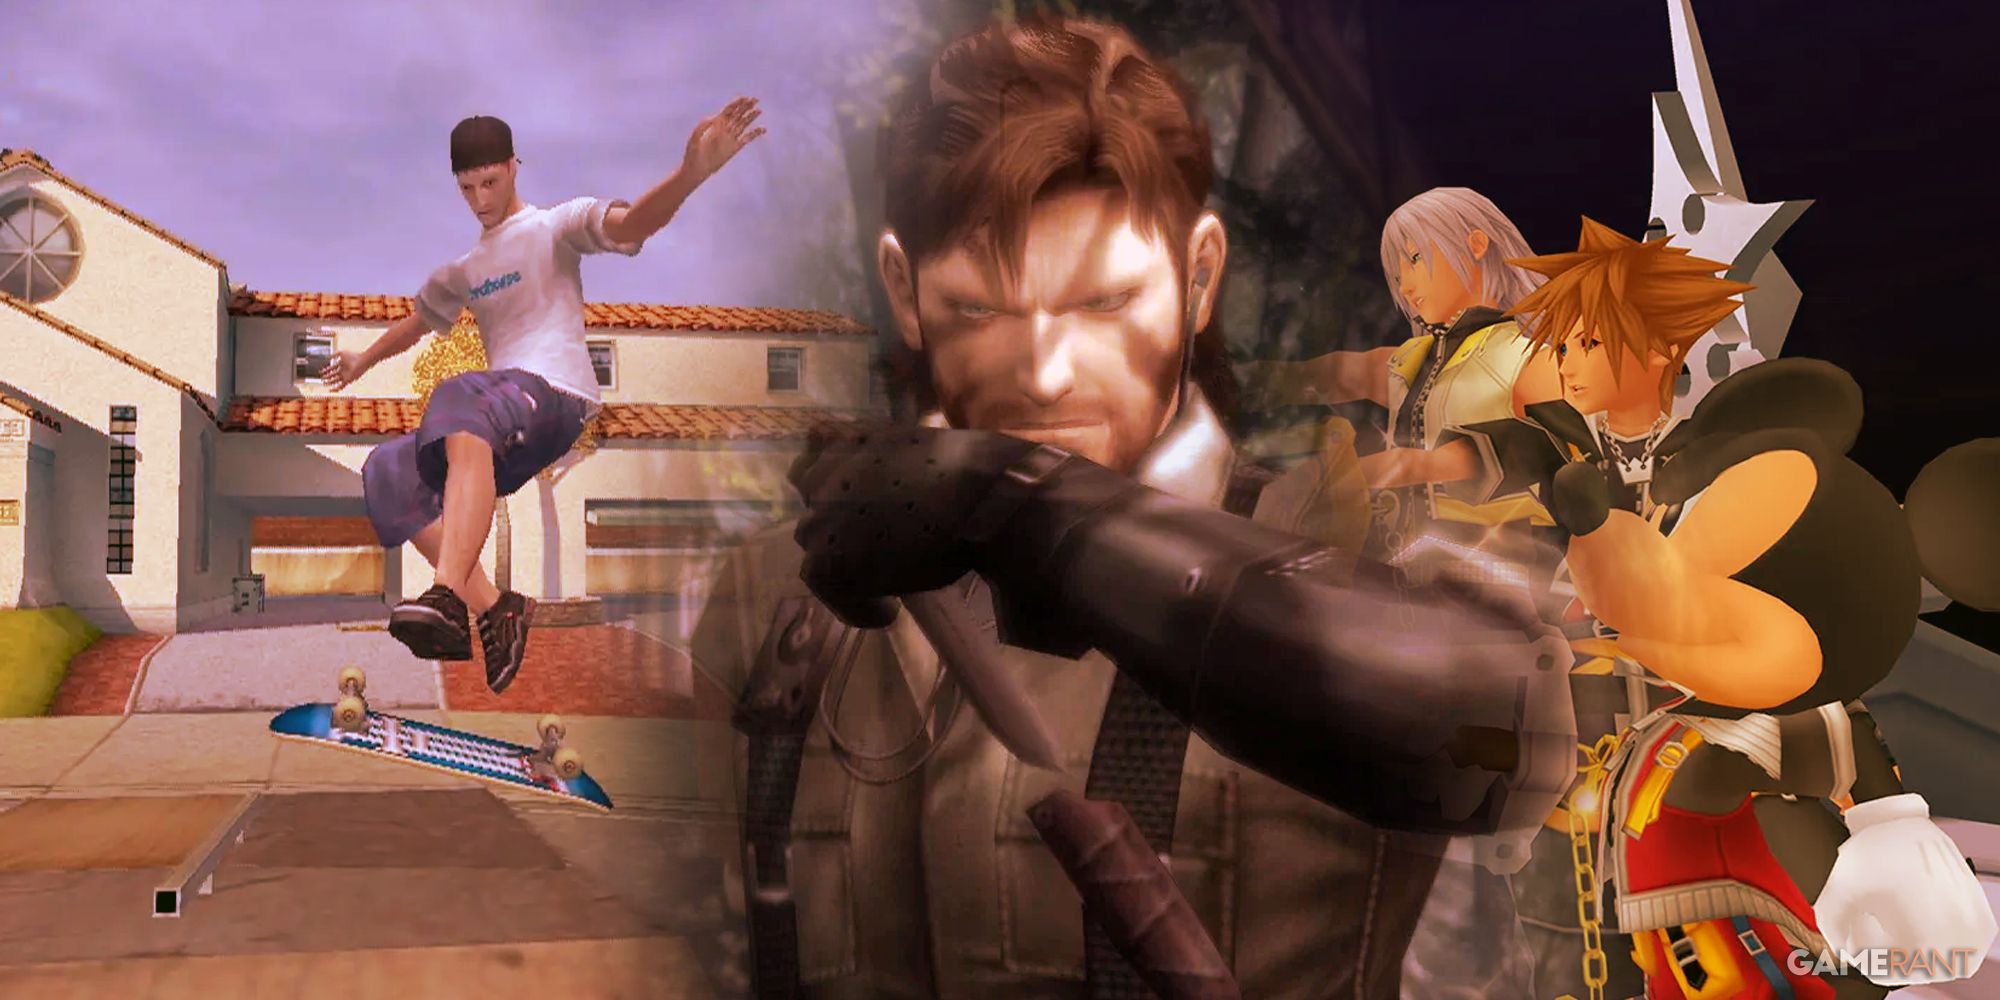 PS2 games Tony Hawk's Pro Skater 3, Metal Gear Solid 3: Snake Eater, Kingdom Hearts 2